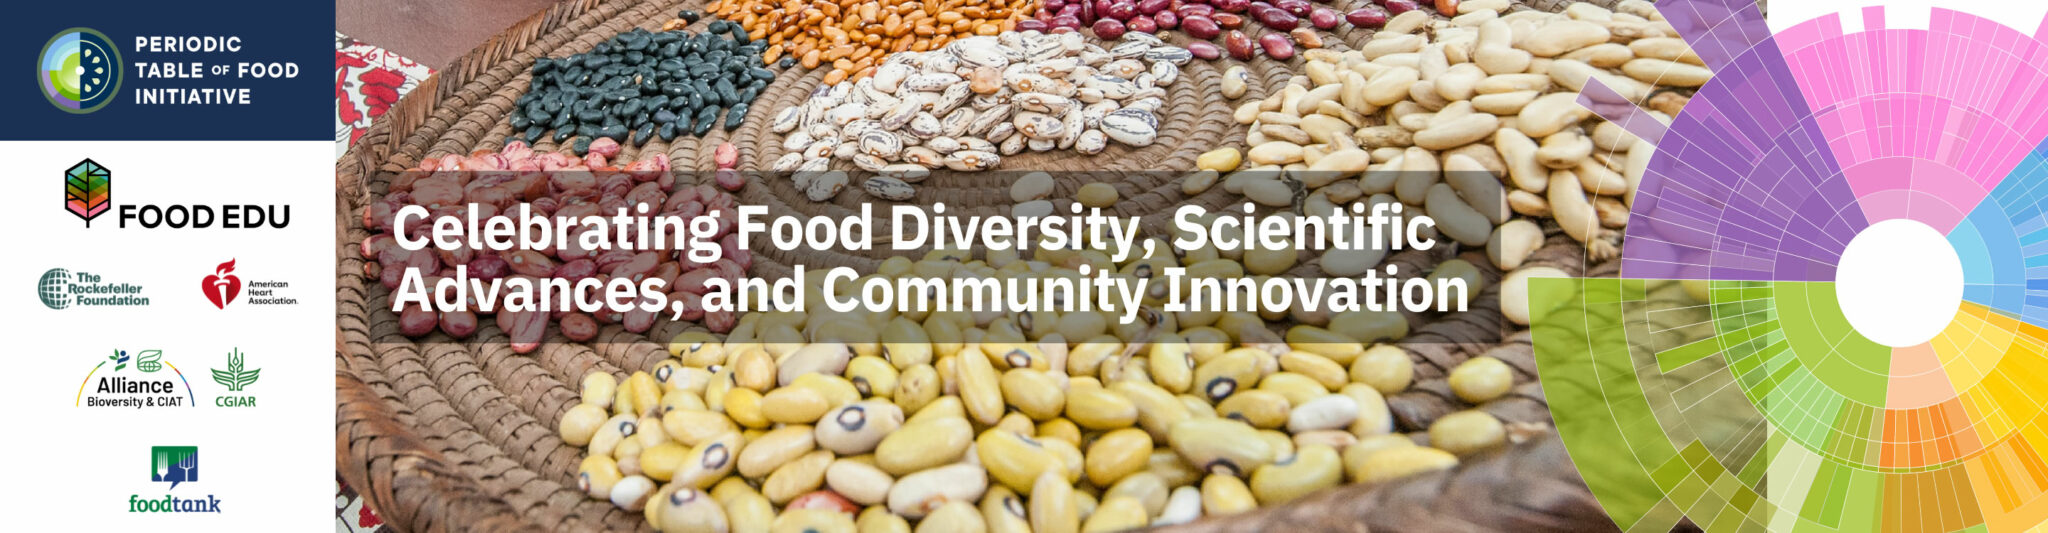 Celebrating Food Diversity - Periodic Table of Food Initiative